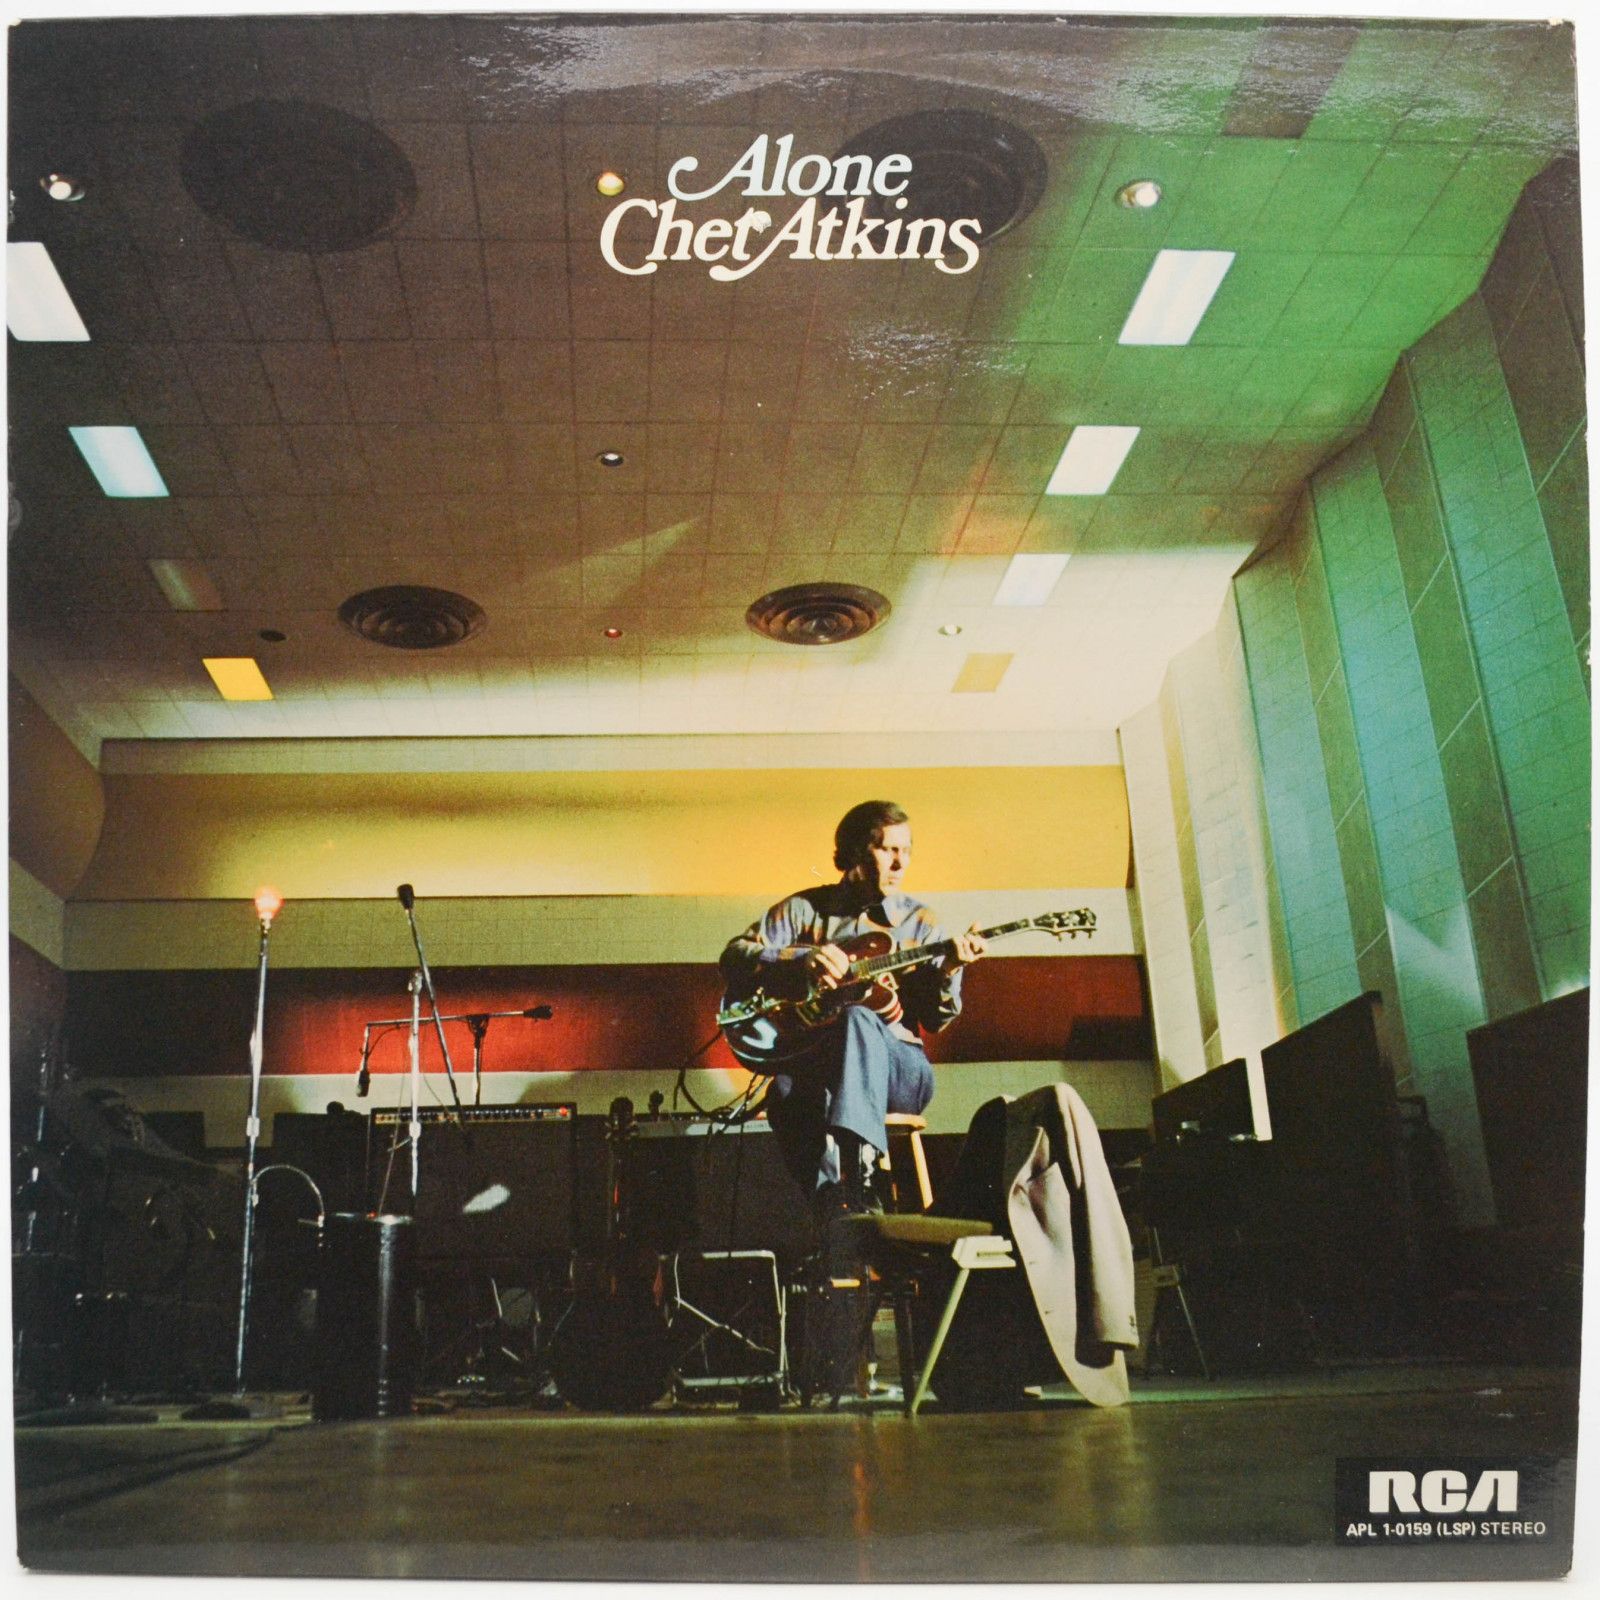 Chet Atkins — Alone, 1973